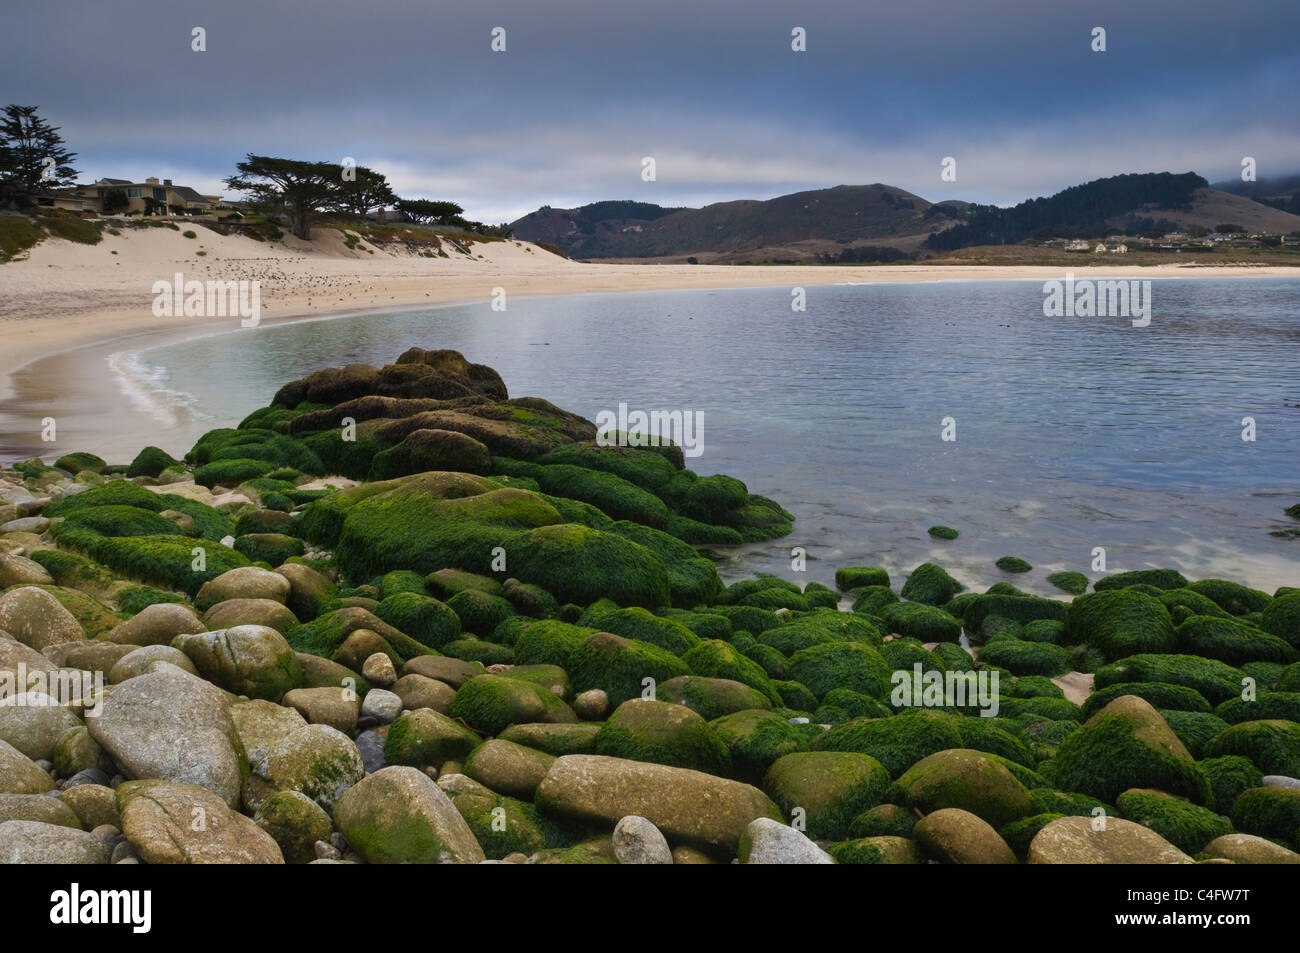 Coperte di alghe rocce lungo il litorale a Fiume Carmel Beach State, penisola di Monterey in California Foto Stock